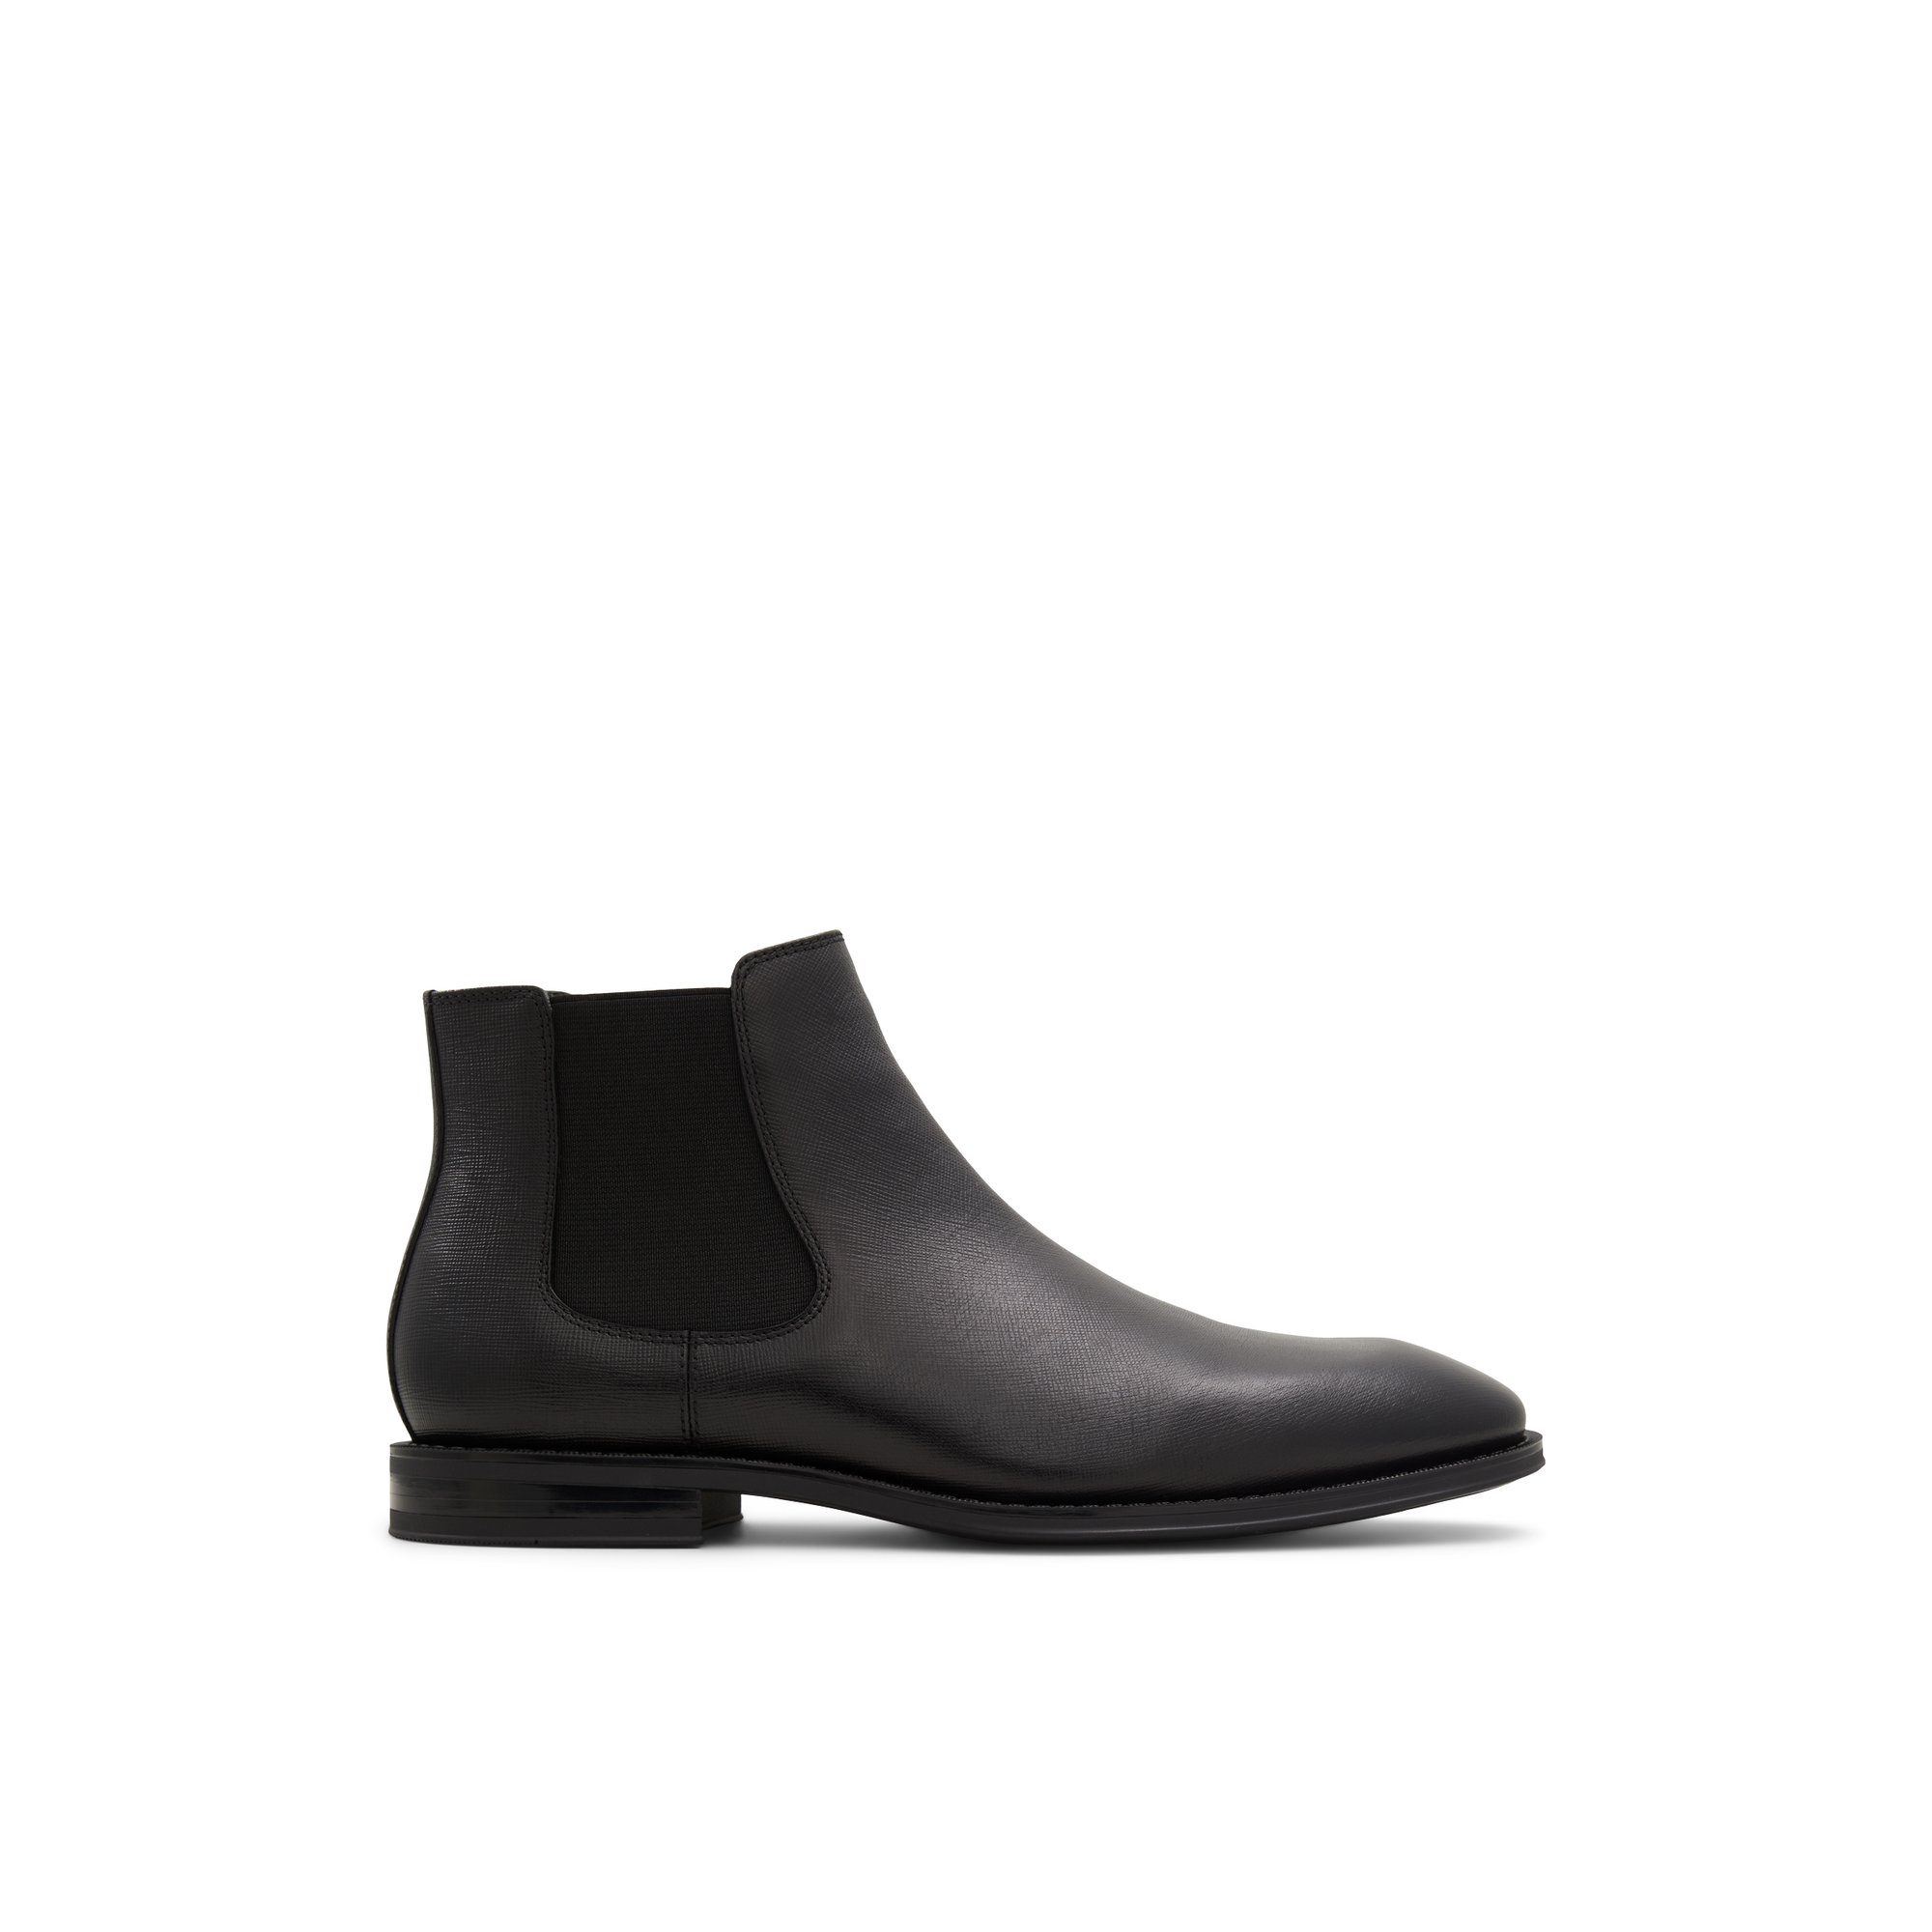 ALDO Collier - Men's Dress Boot - Black